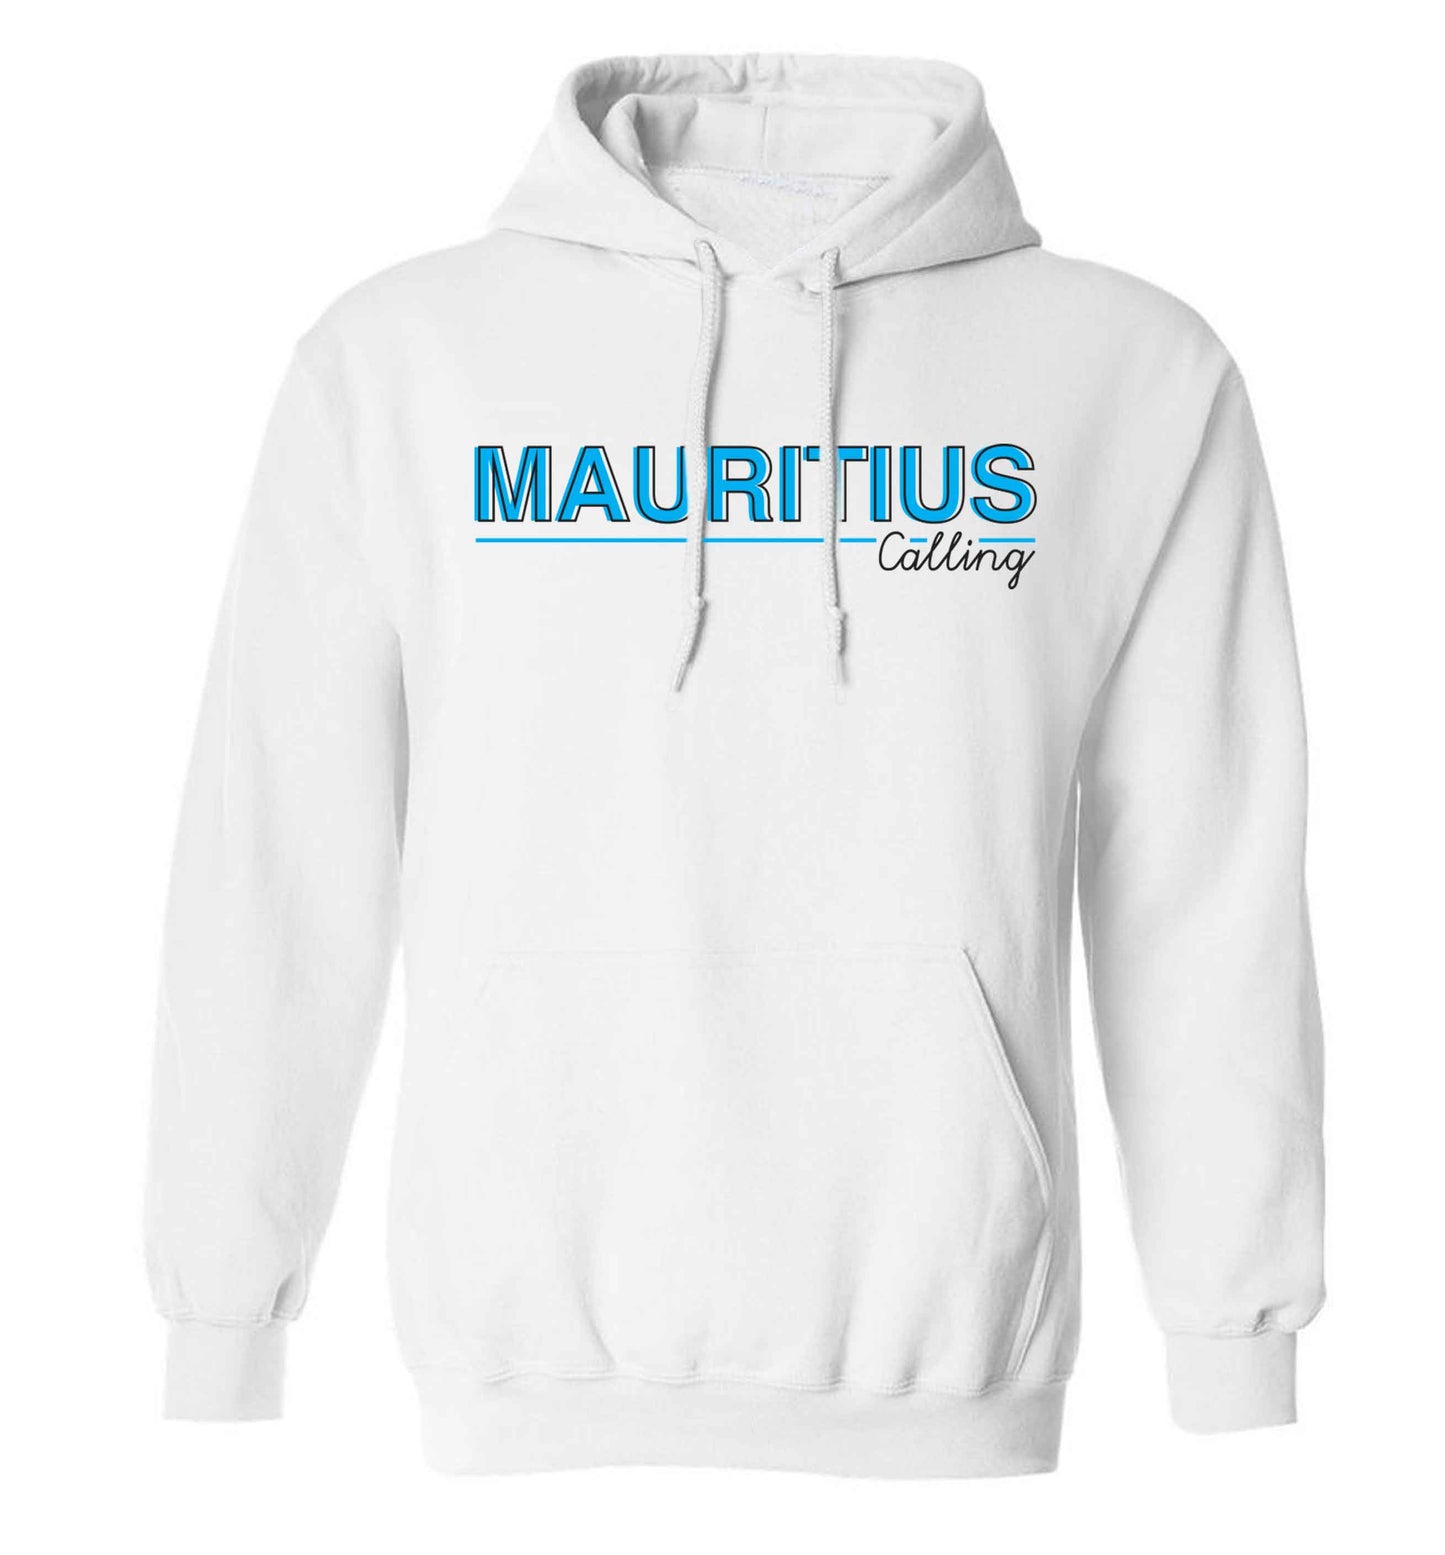 Mauritius calling adults unisex white hoodie 2XL